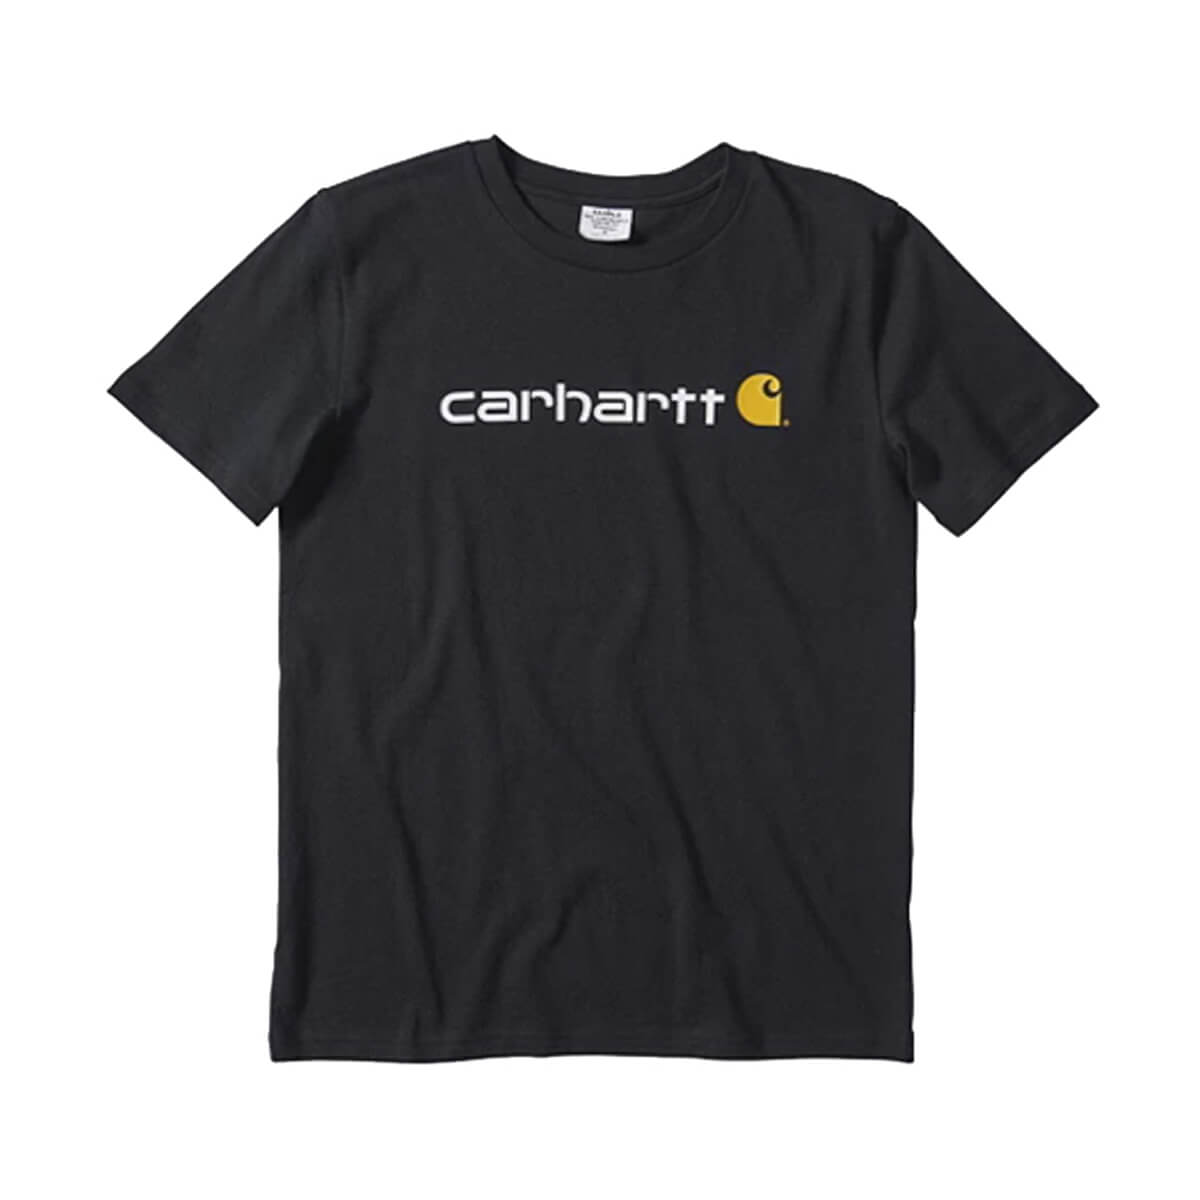 Carhartt Boy's Short Sleeve Cotton Graphic T-Shirt - Black